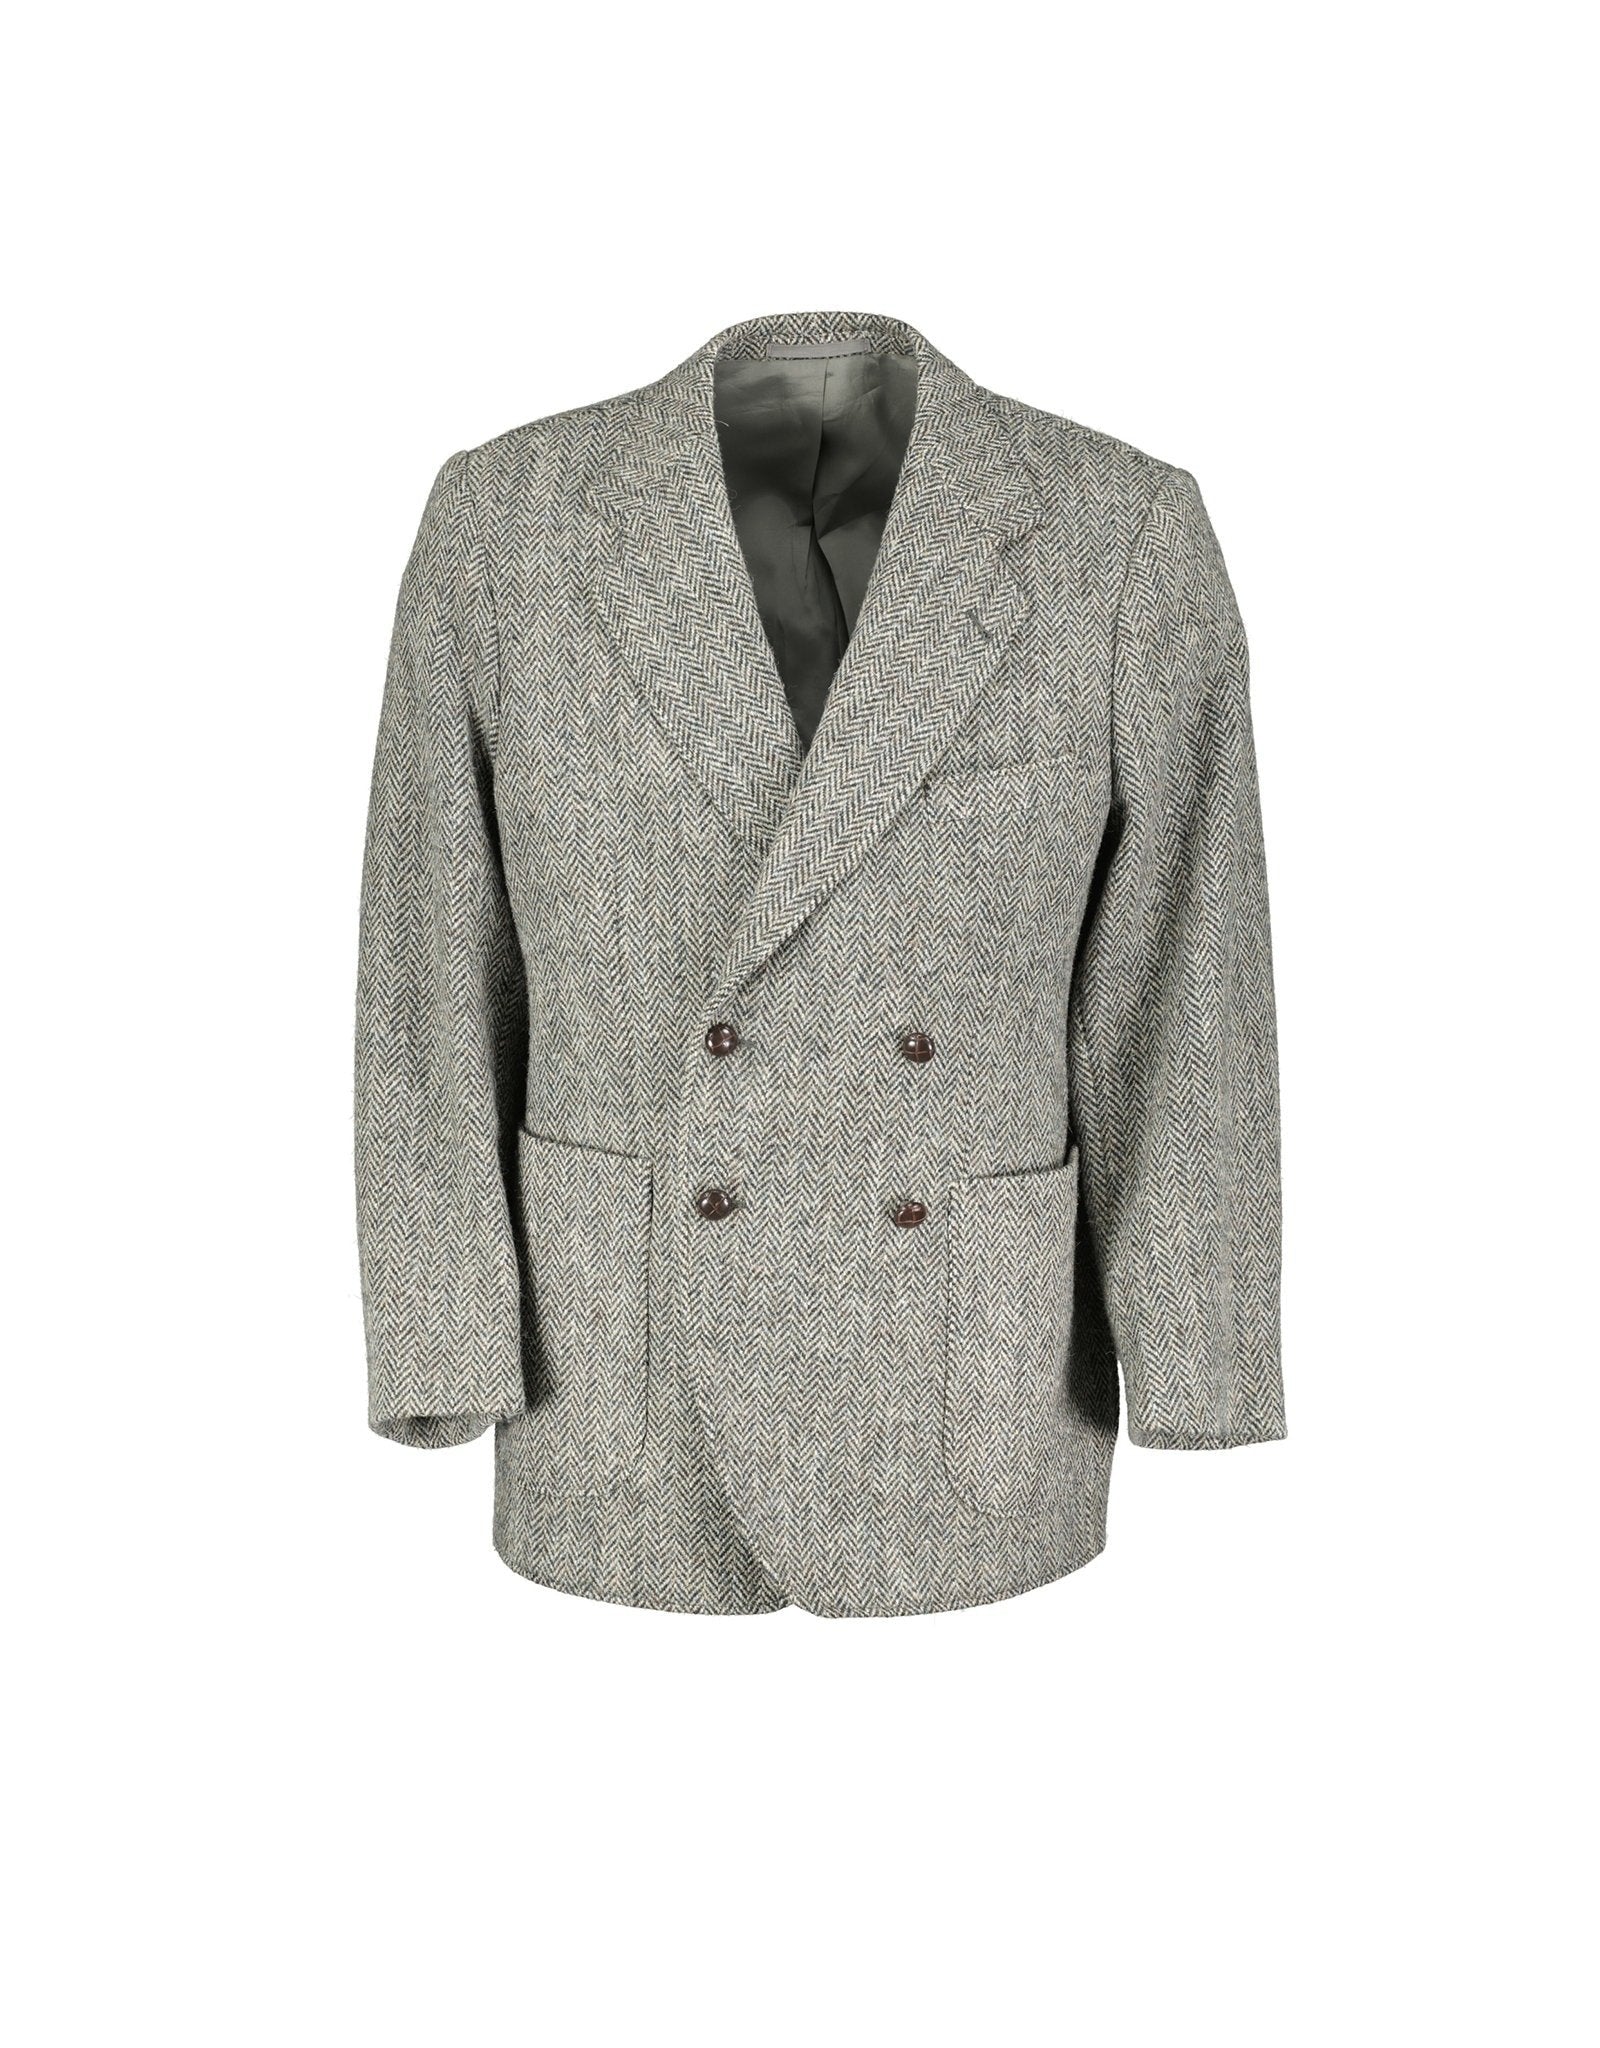 Harris Tweed Gray Herringbone Double Breasted Sport Coat, US 44S, EU 54S